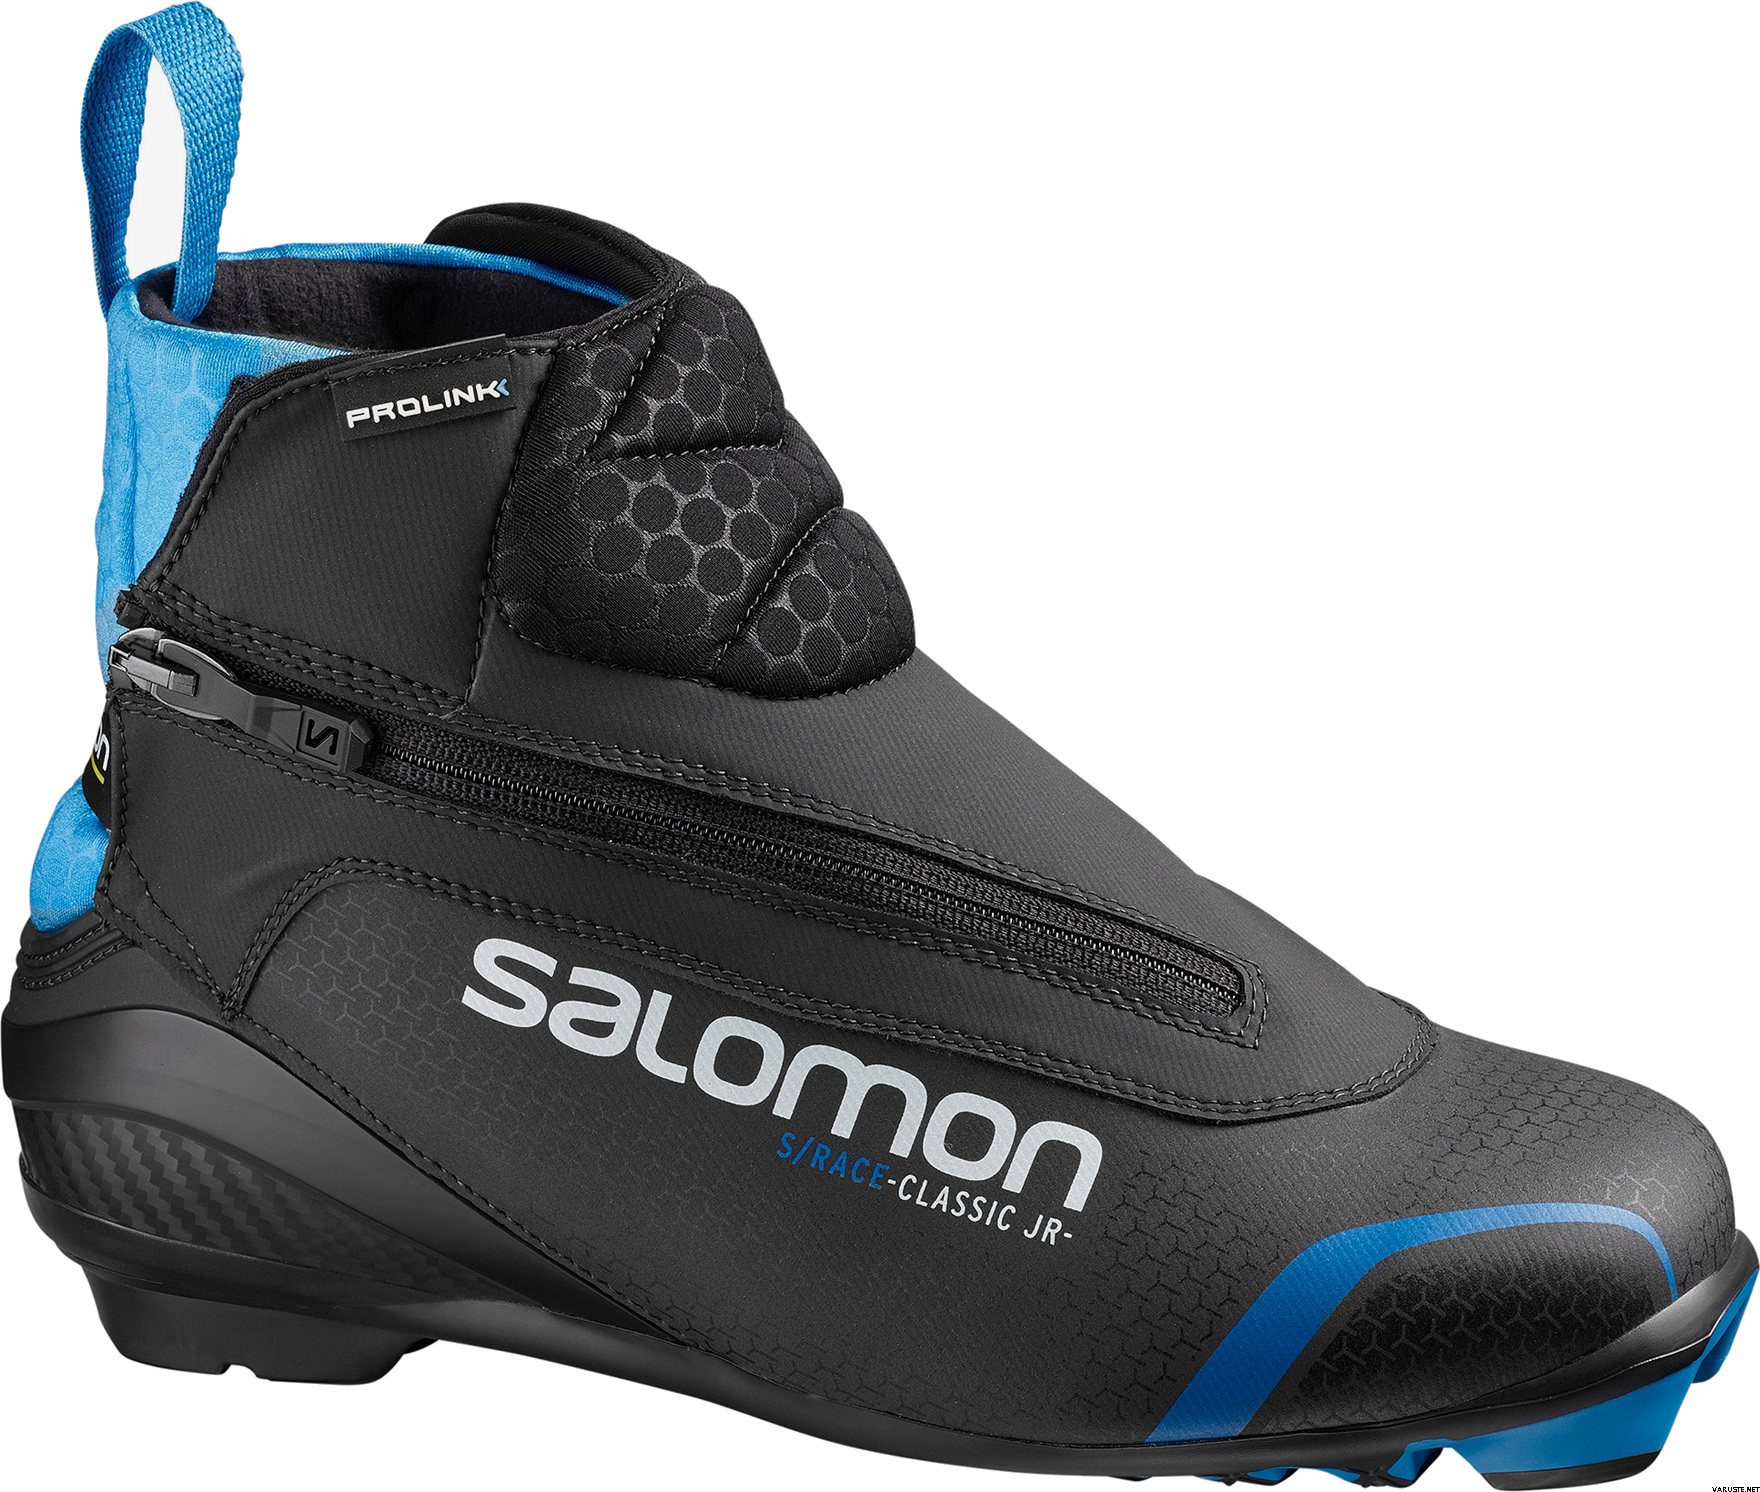 Salomon S/Race Classic Prolink JR | Boots | Varuste.net English